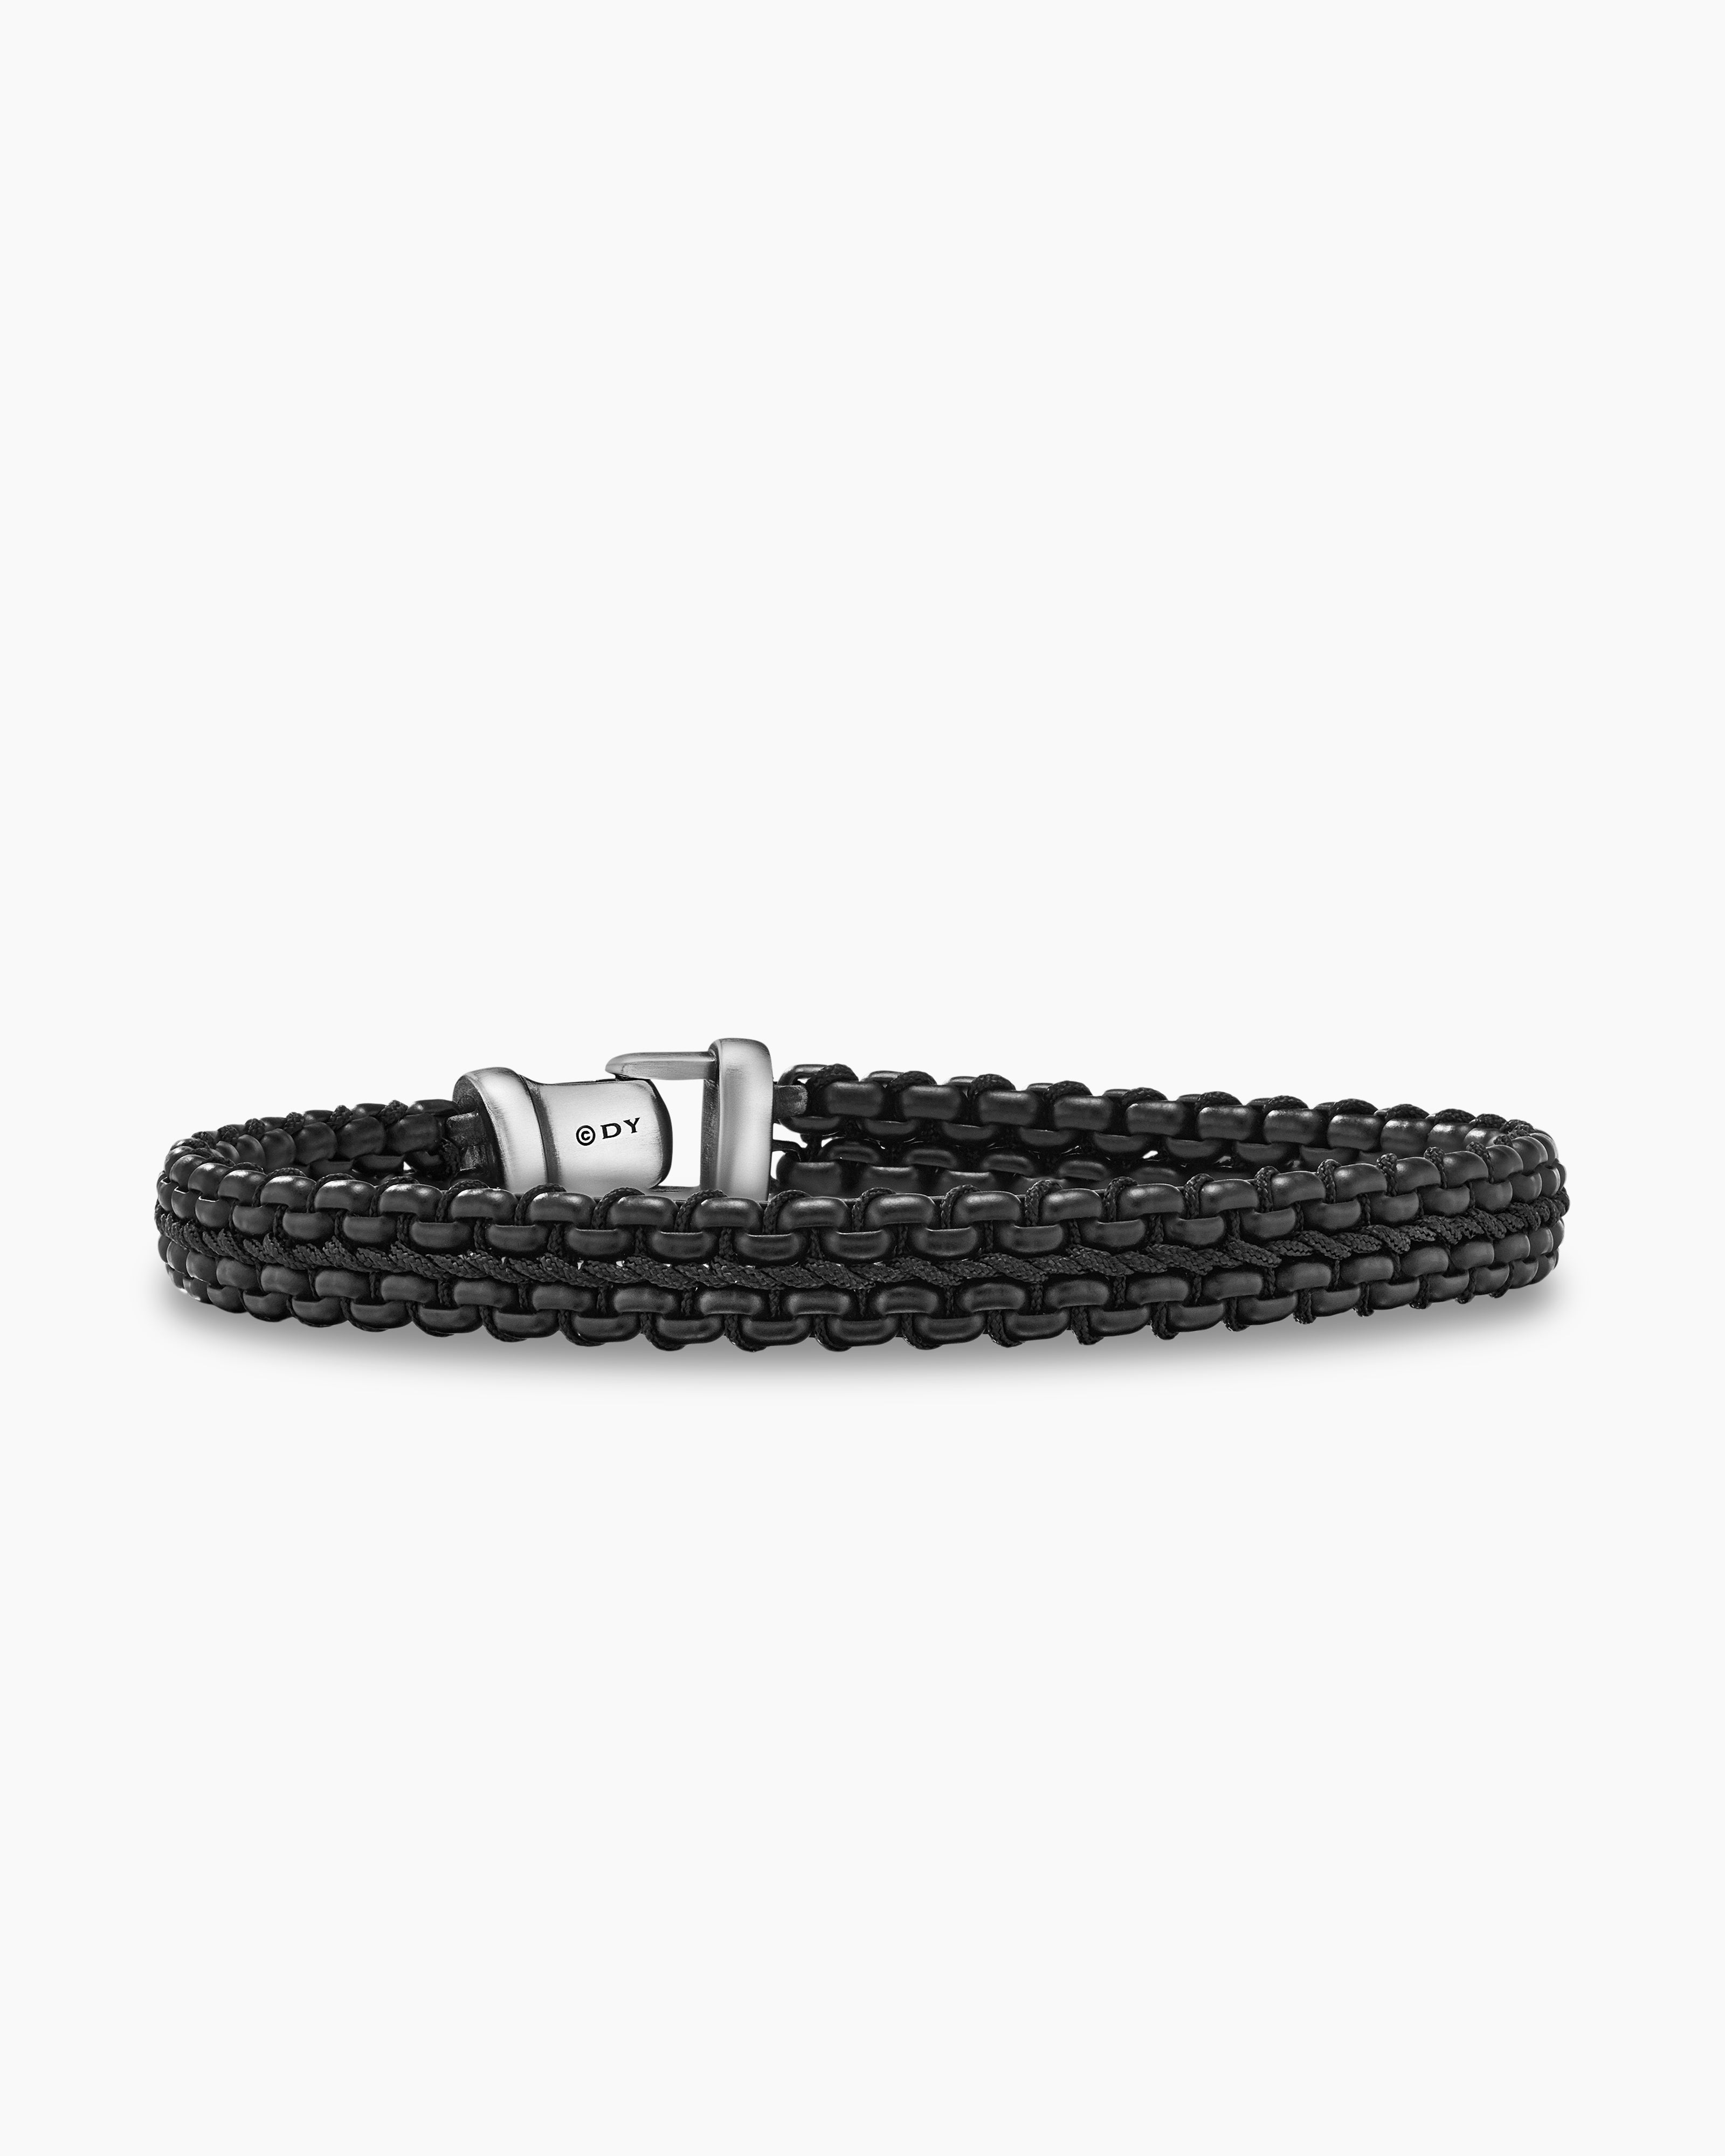 Black Braided Leather & Silver Men's Wrap Bracelet - Men's Bracelets |  Lazaro SoHo